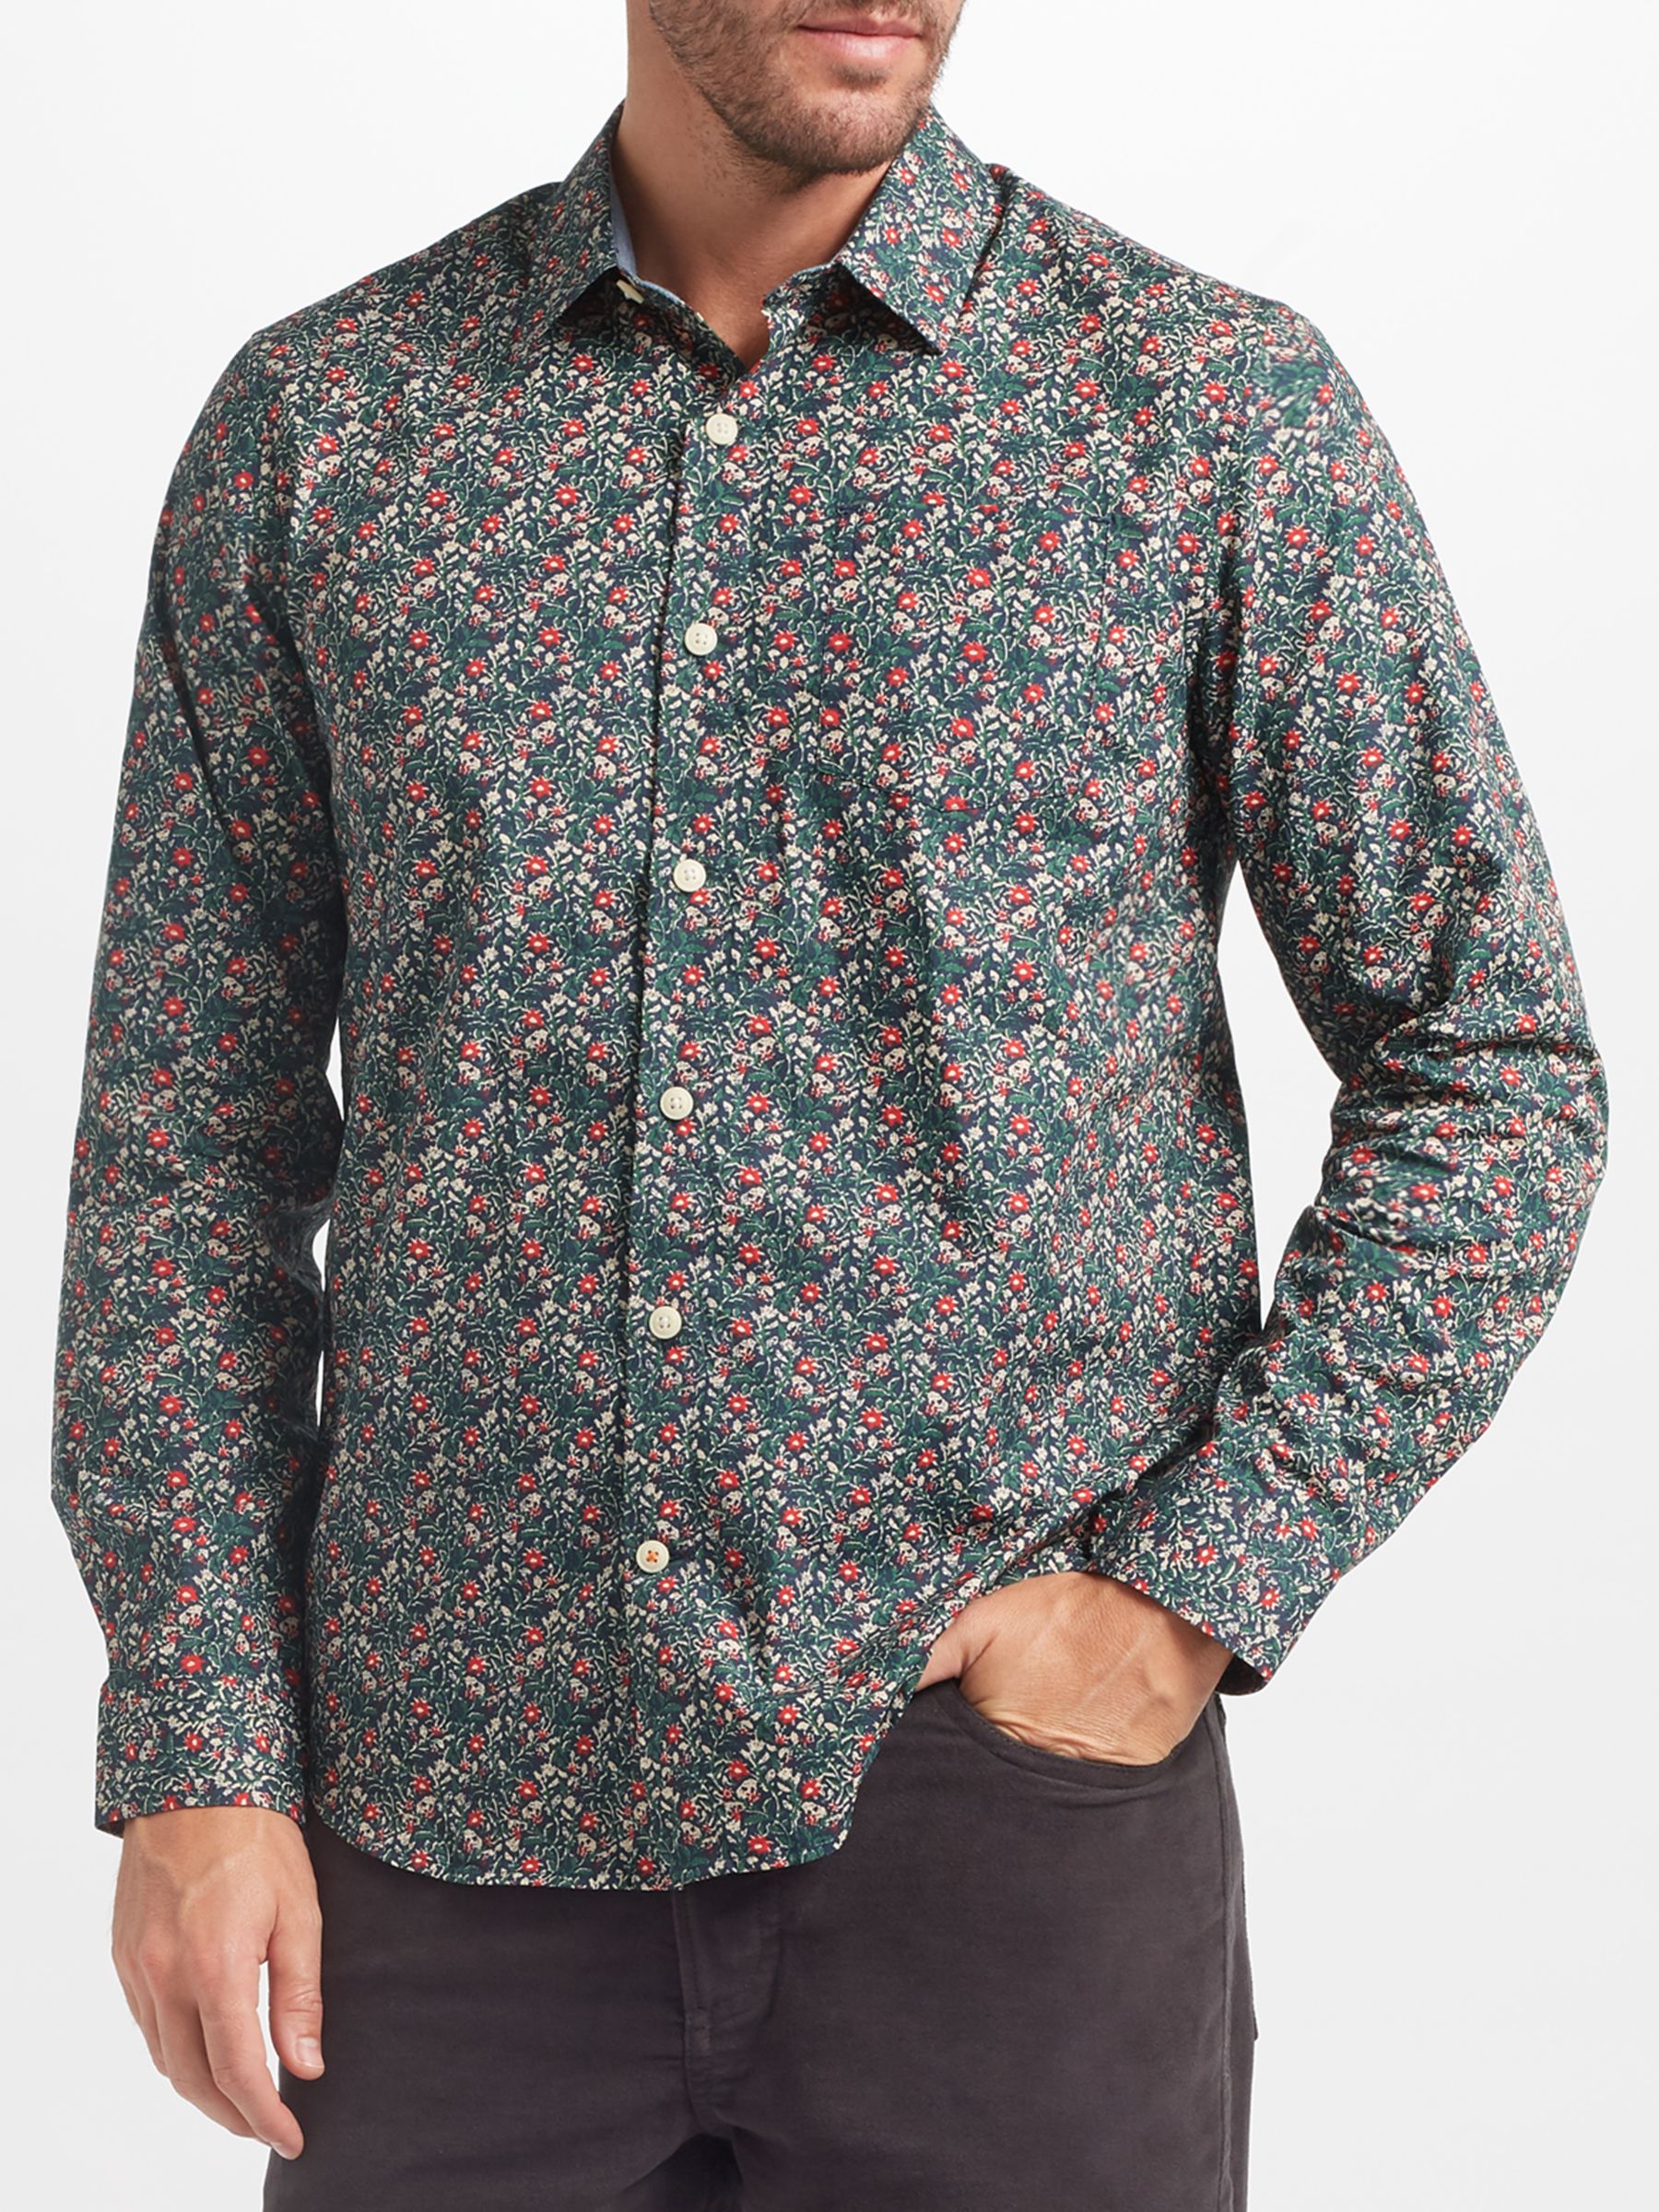 John Lewis & Partners Lotus Floral Print Shirt, Navy, XL